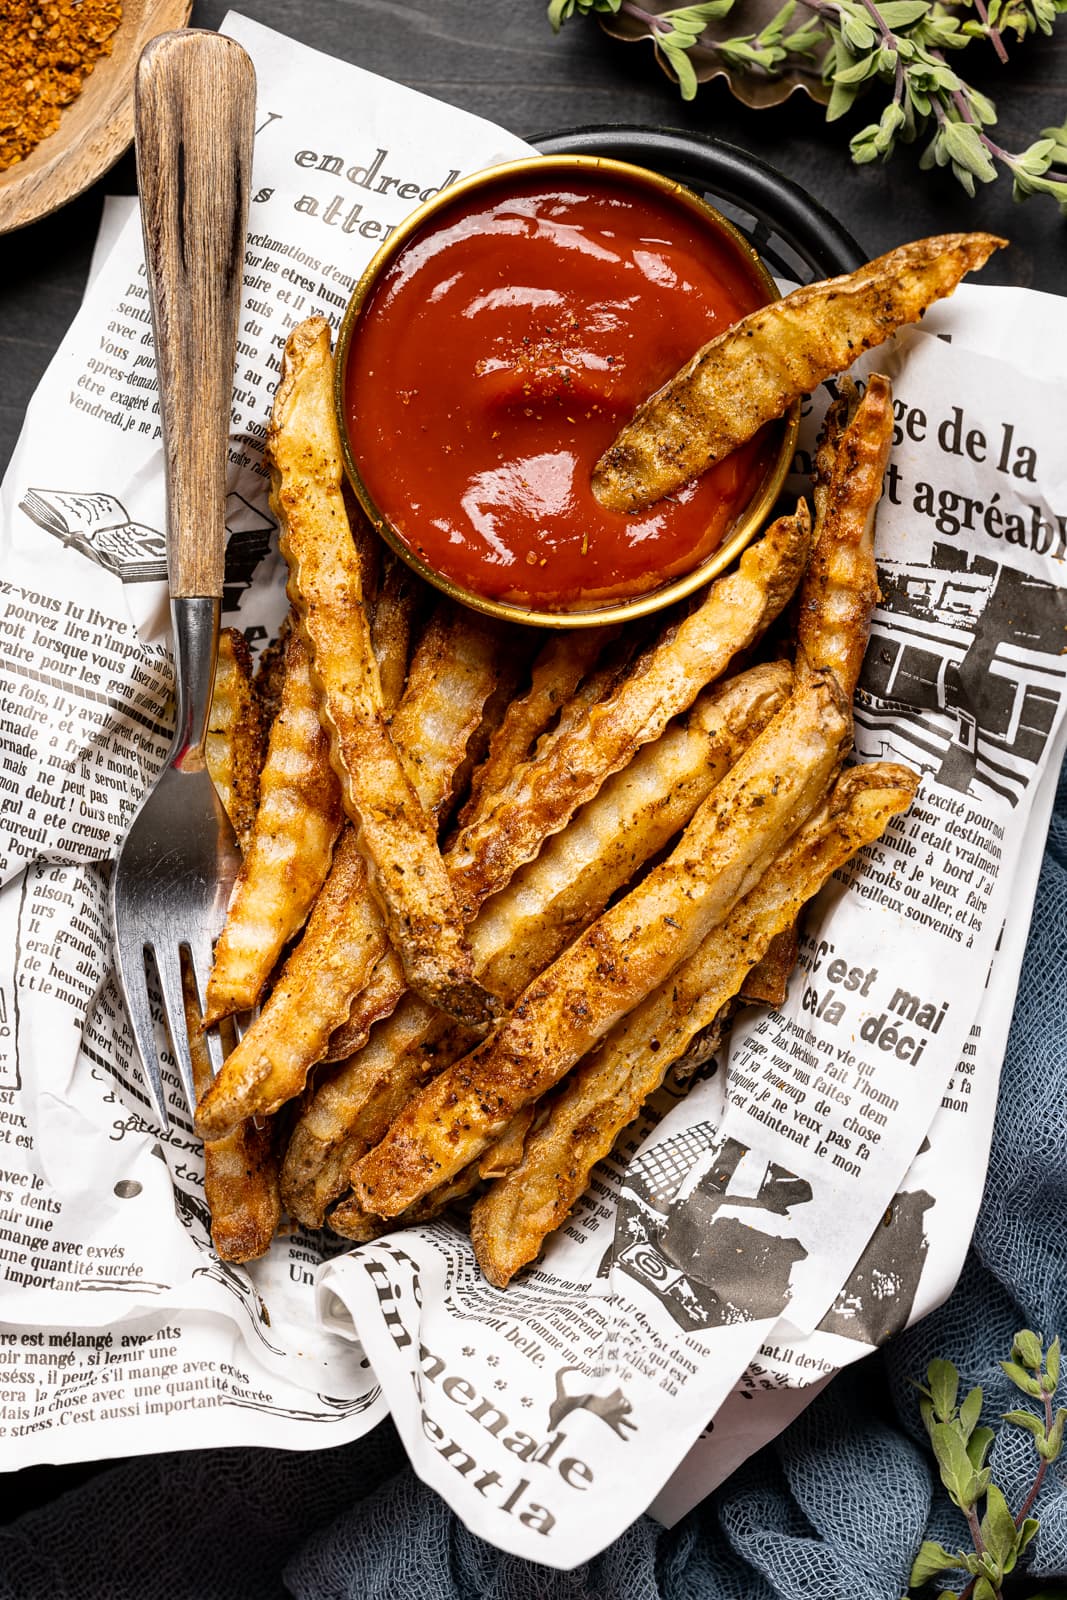 Frozen Crinkle Fries in Air Fryer - Fork To Spoon